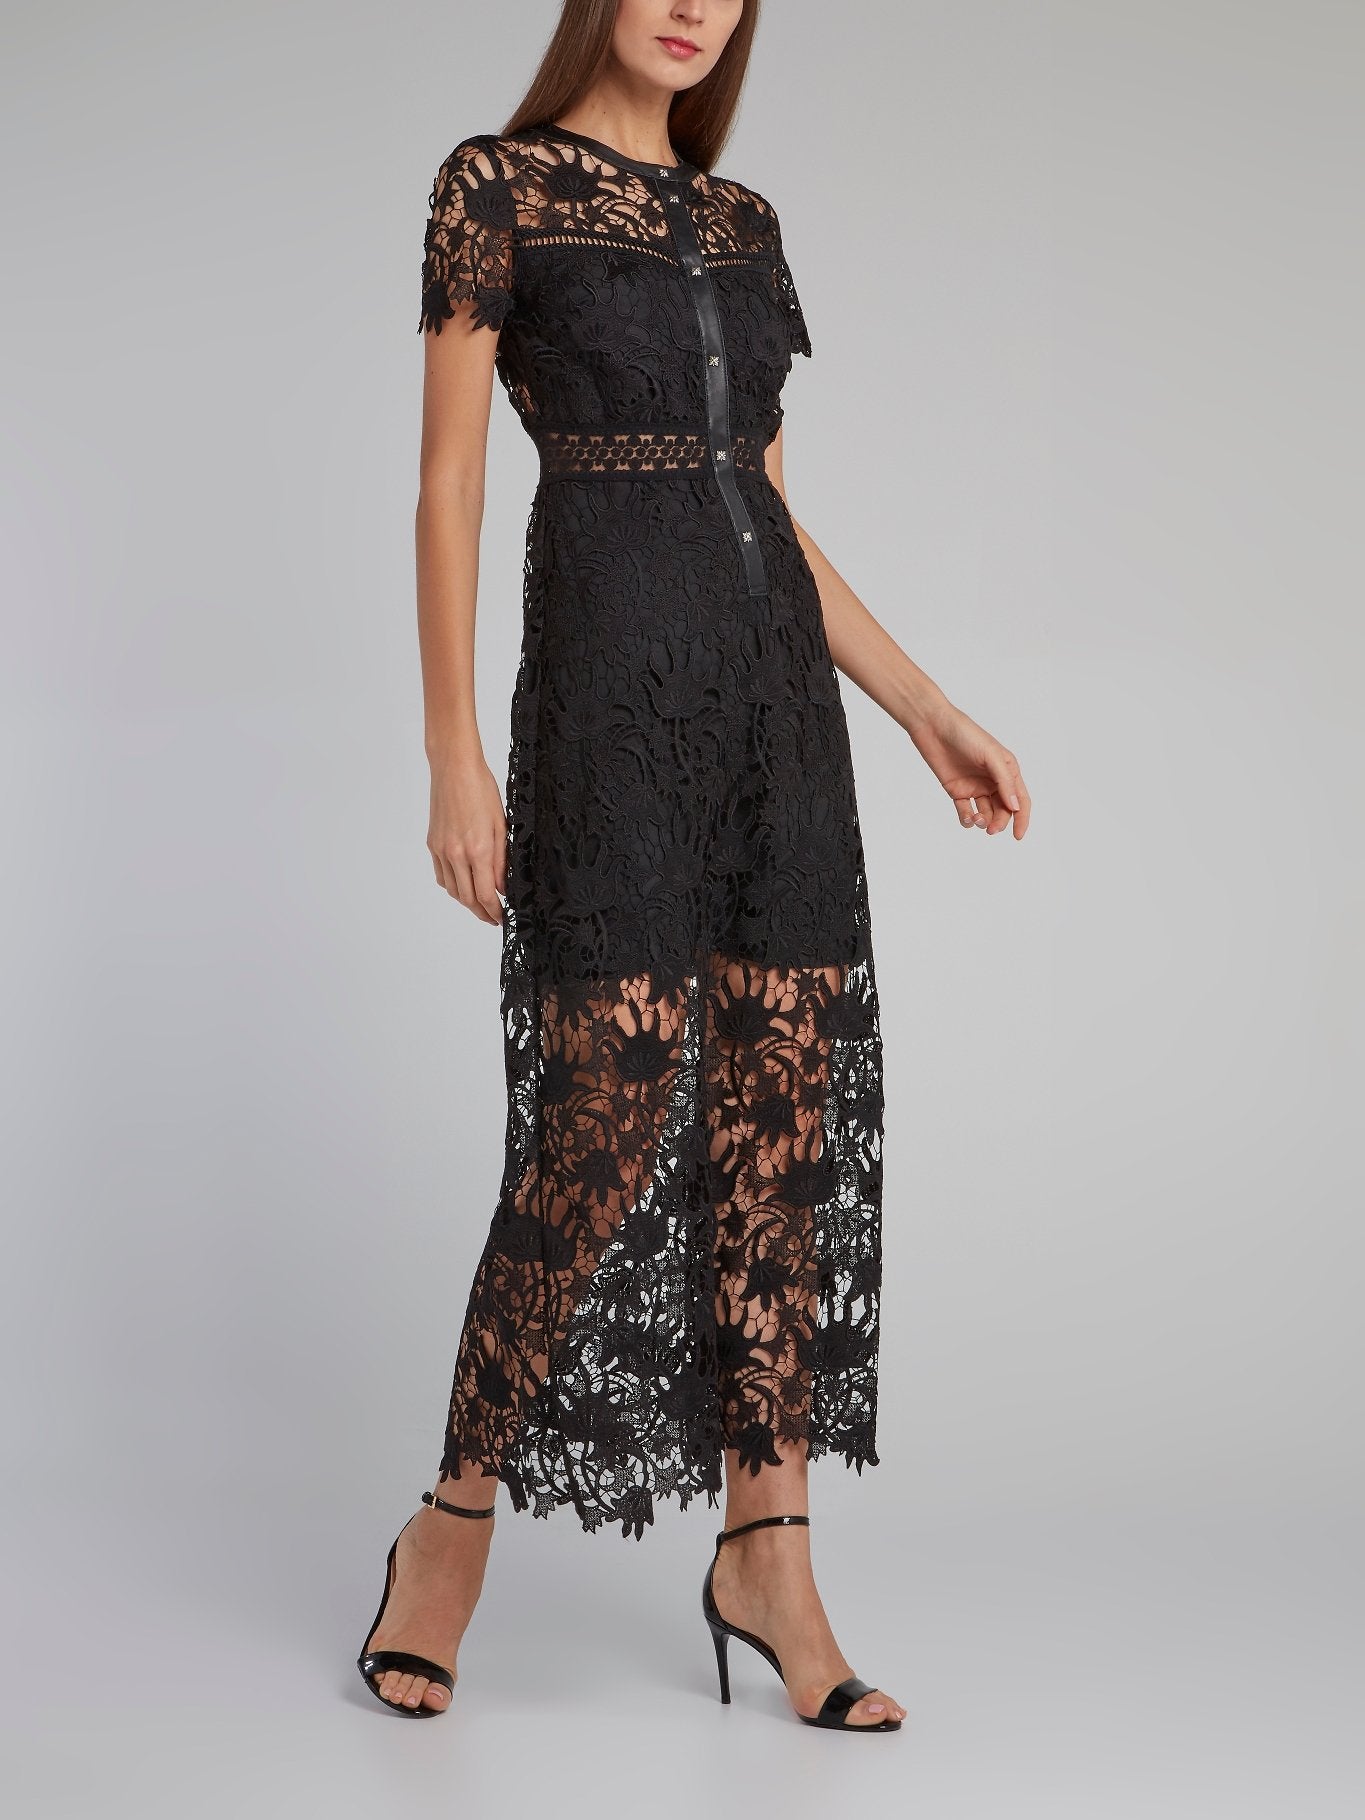 Fonollosa Black Macrame Dress – Maison-B-More Global Store